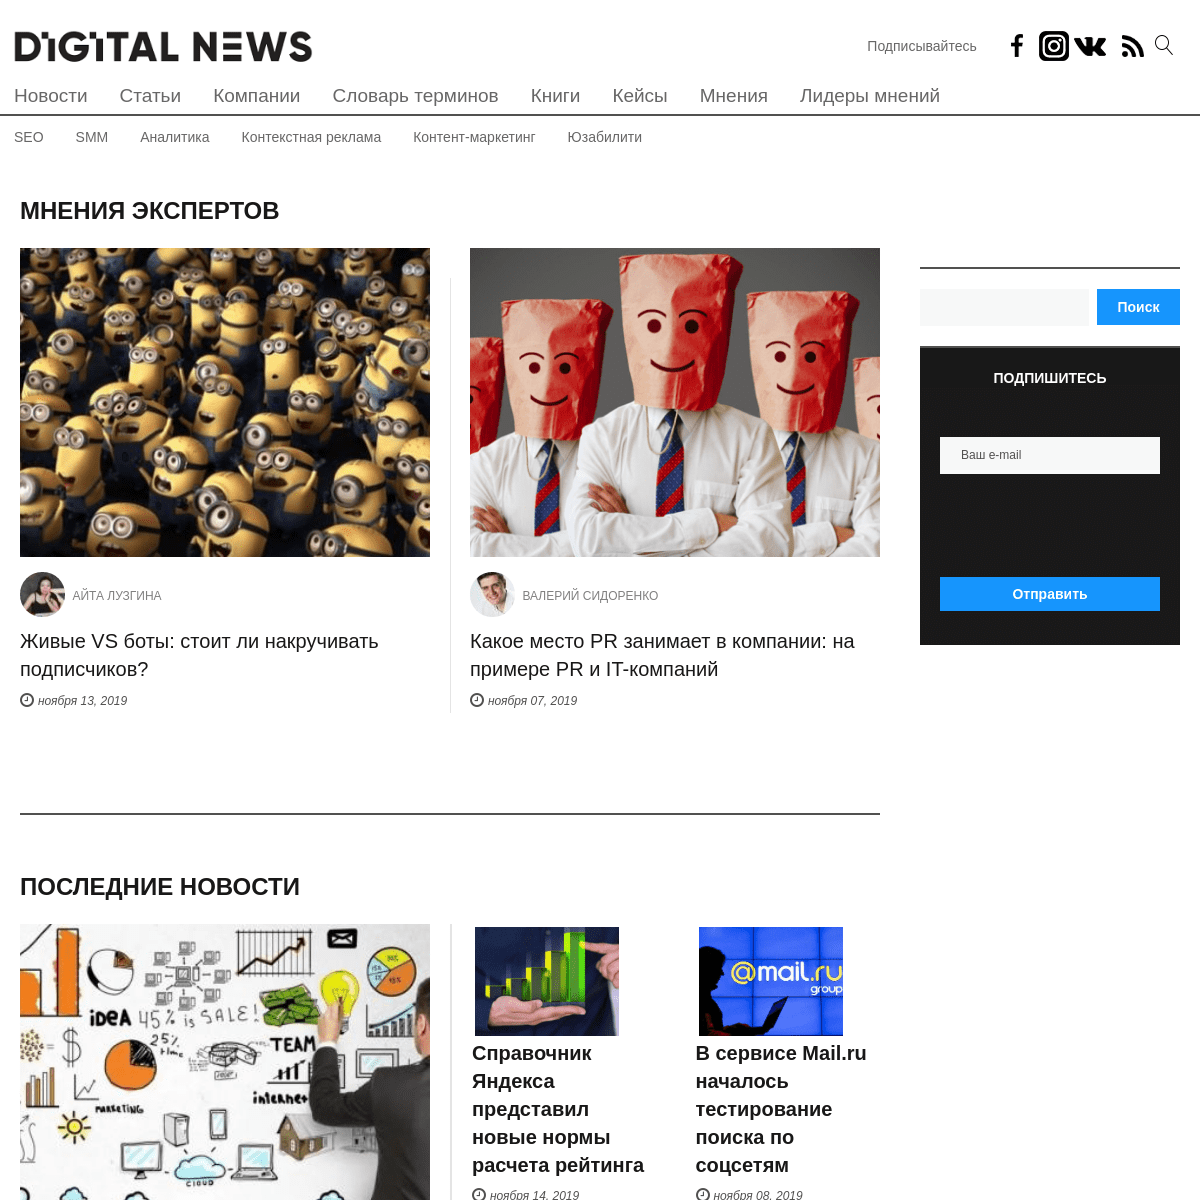 A complete backup of digitalnews.ru